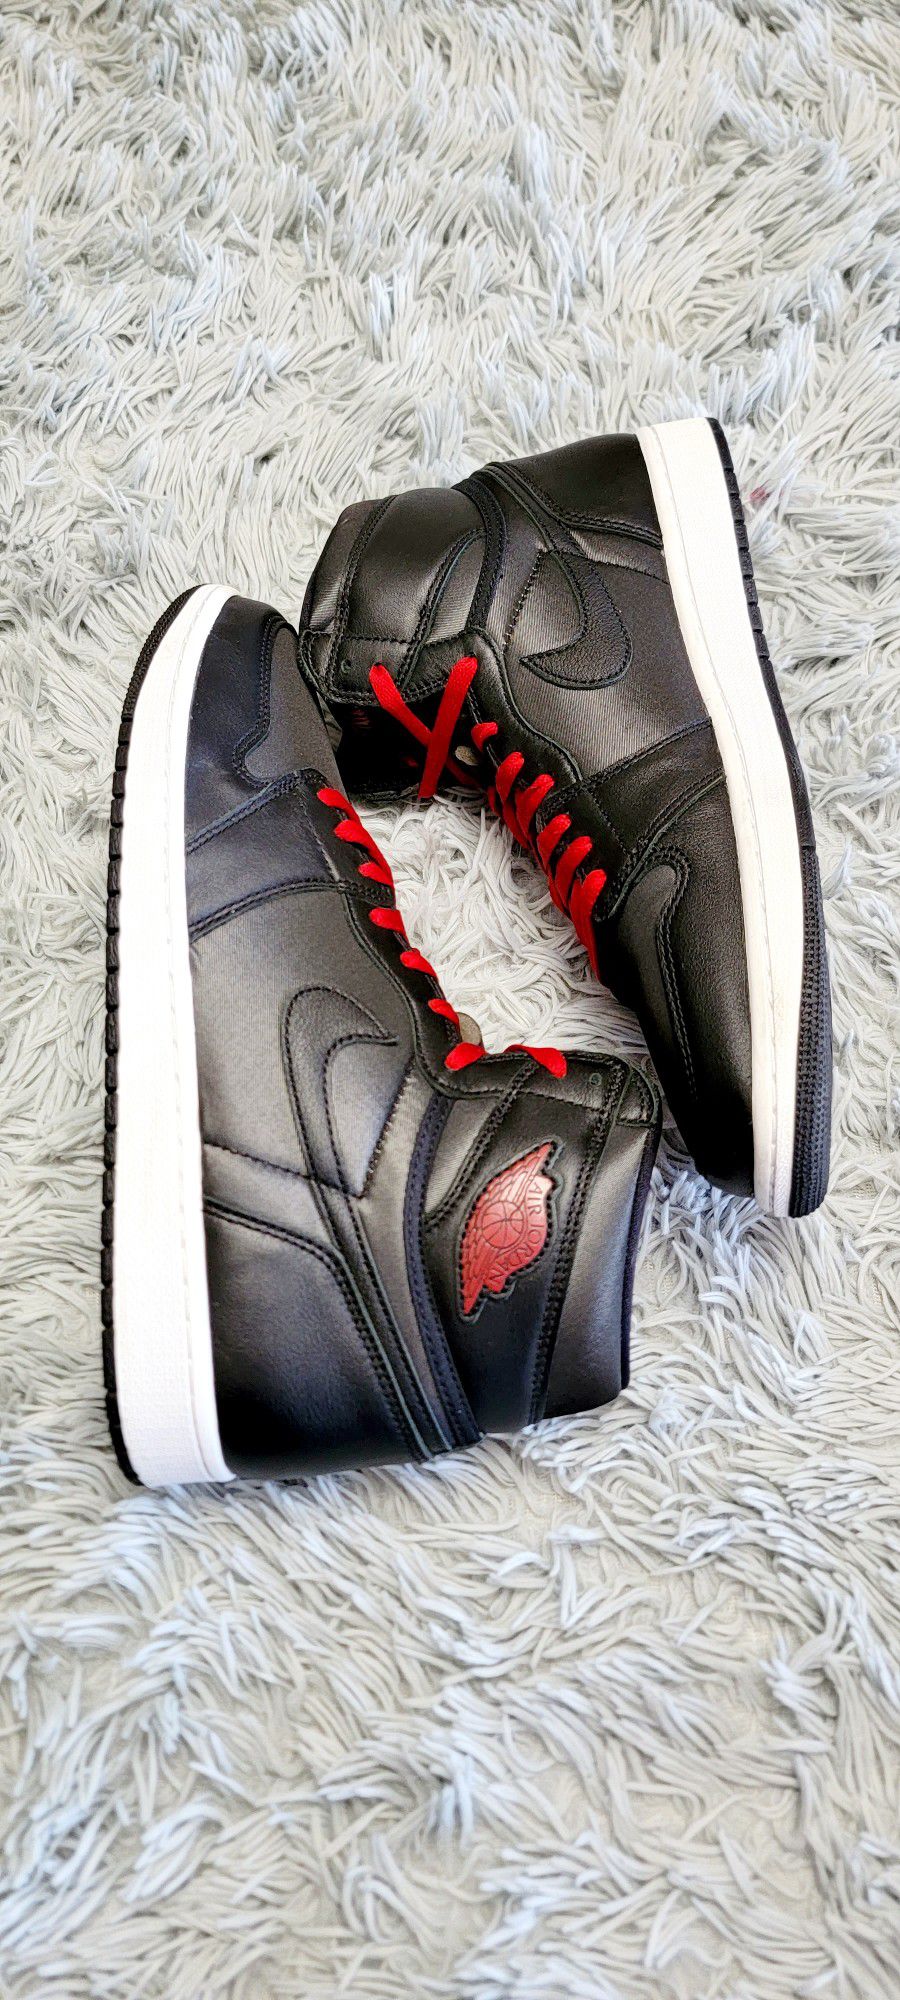 Size 13 Nike Air Jordan 1 Retro High OG Black Gym Red 555088-060.
